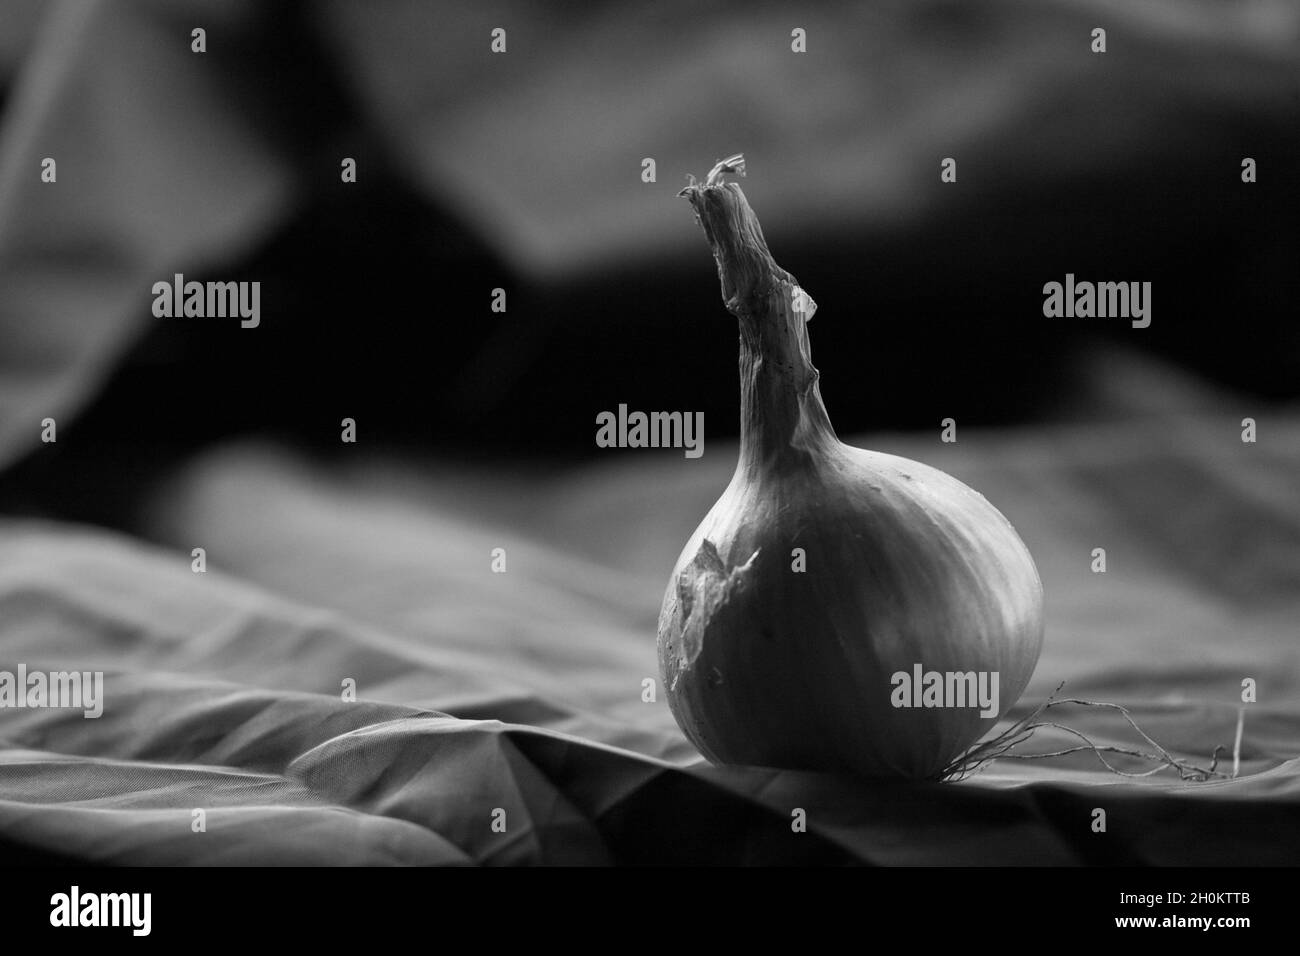 Fresh onion on a worktop Stock Photo